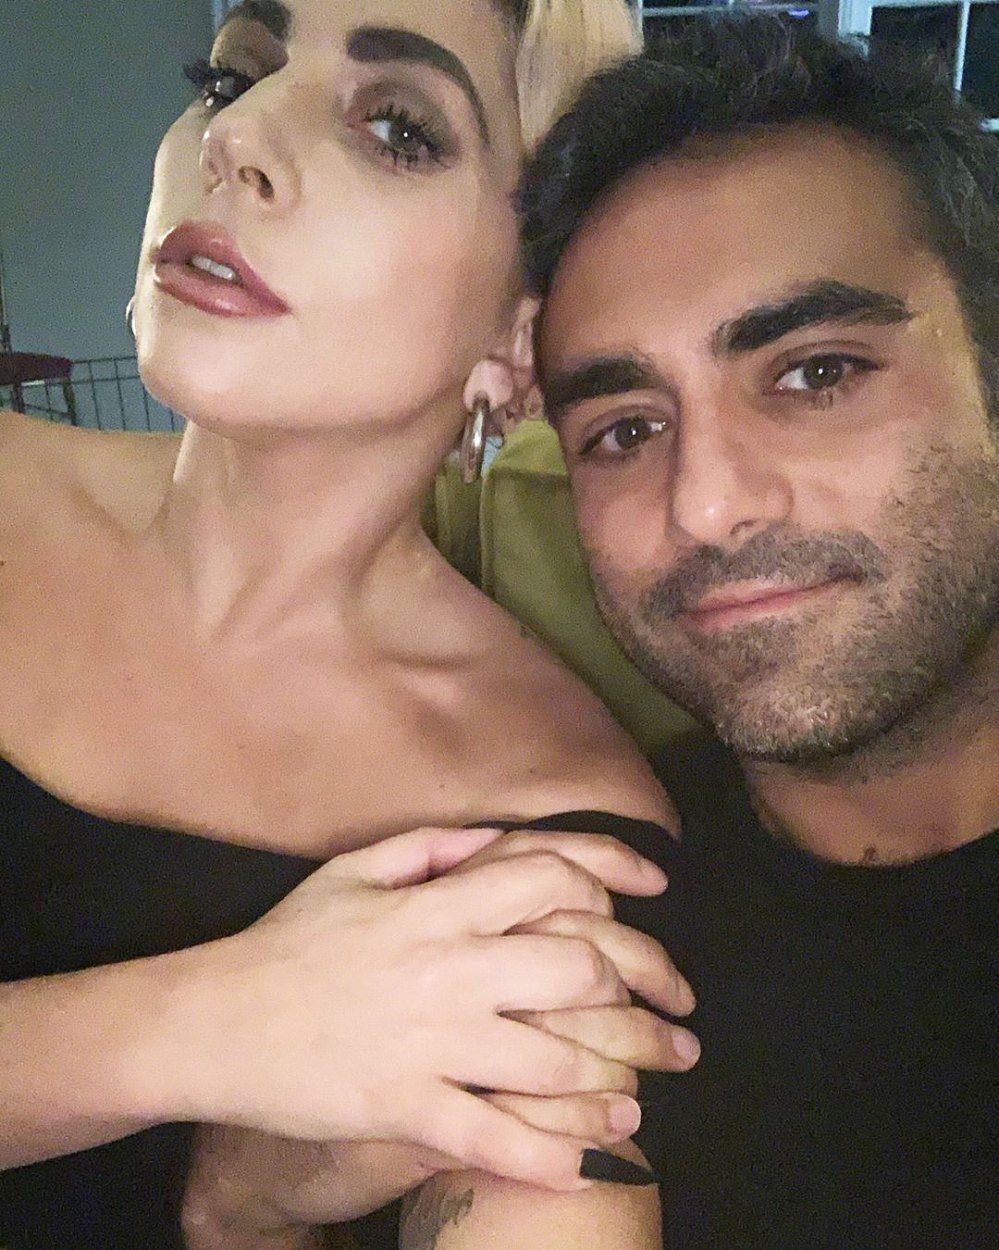 Lady Gaga Cuddles Up to Boyfriend Michael Polansky on ‘Day 6 of Self-Quarantining